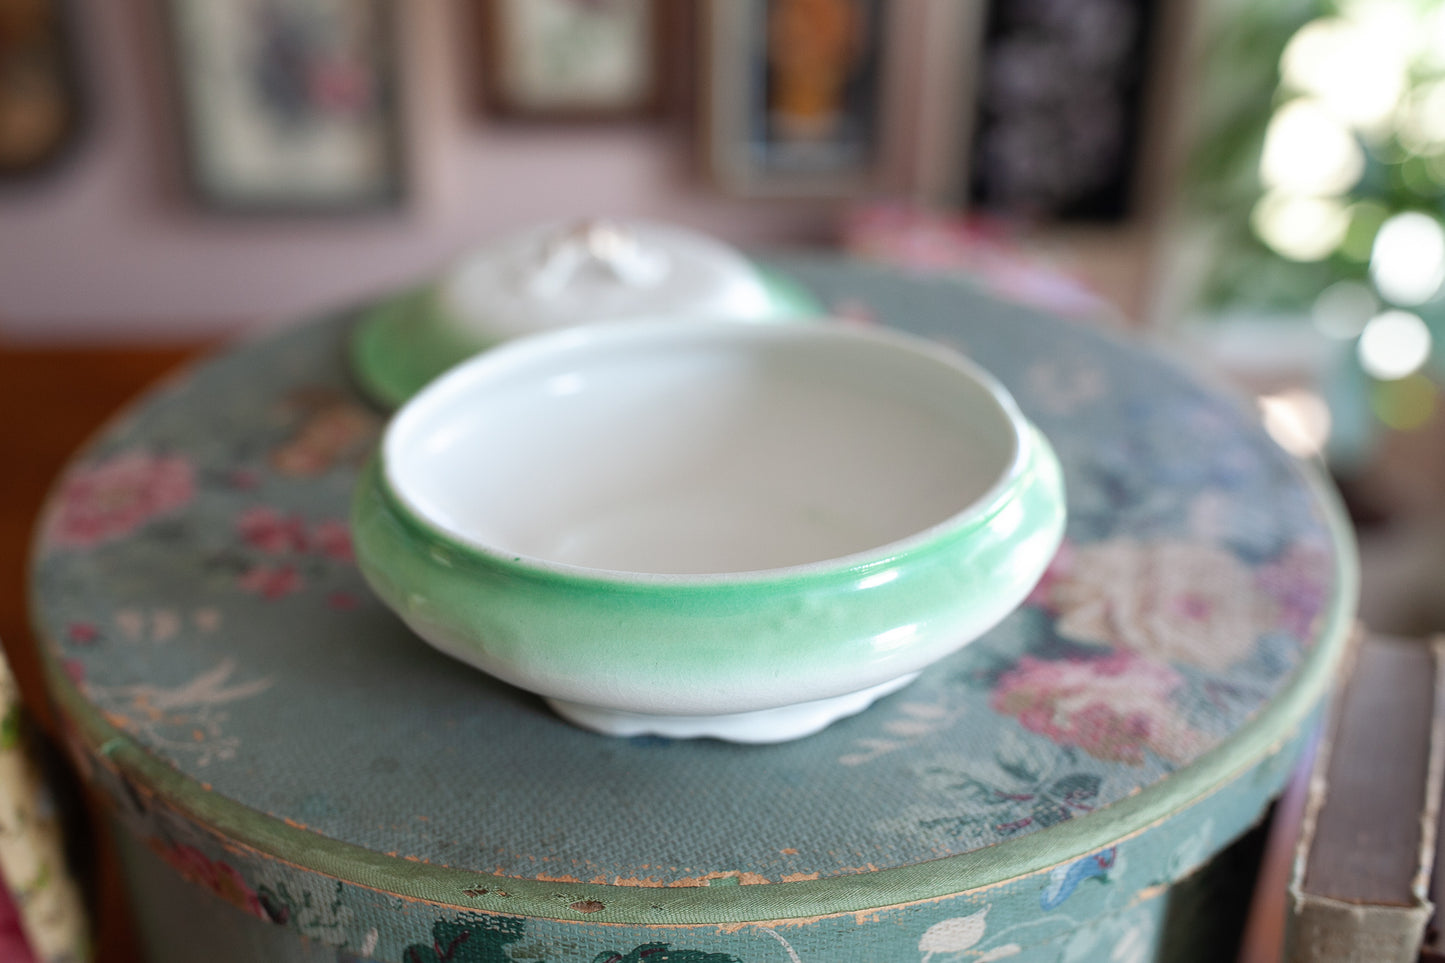 Antique China Soap Dish, Victorian Soap Dish, Rare Three part Soap Dish, Decorative Soap Dish, Lidded Soap Dish, Vintage Bathroom Decor